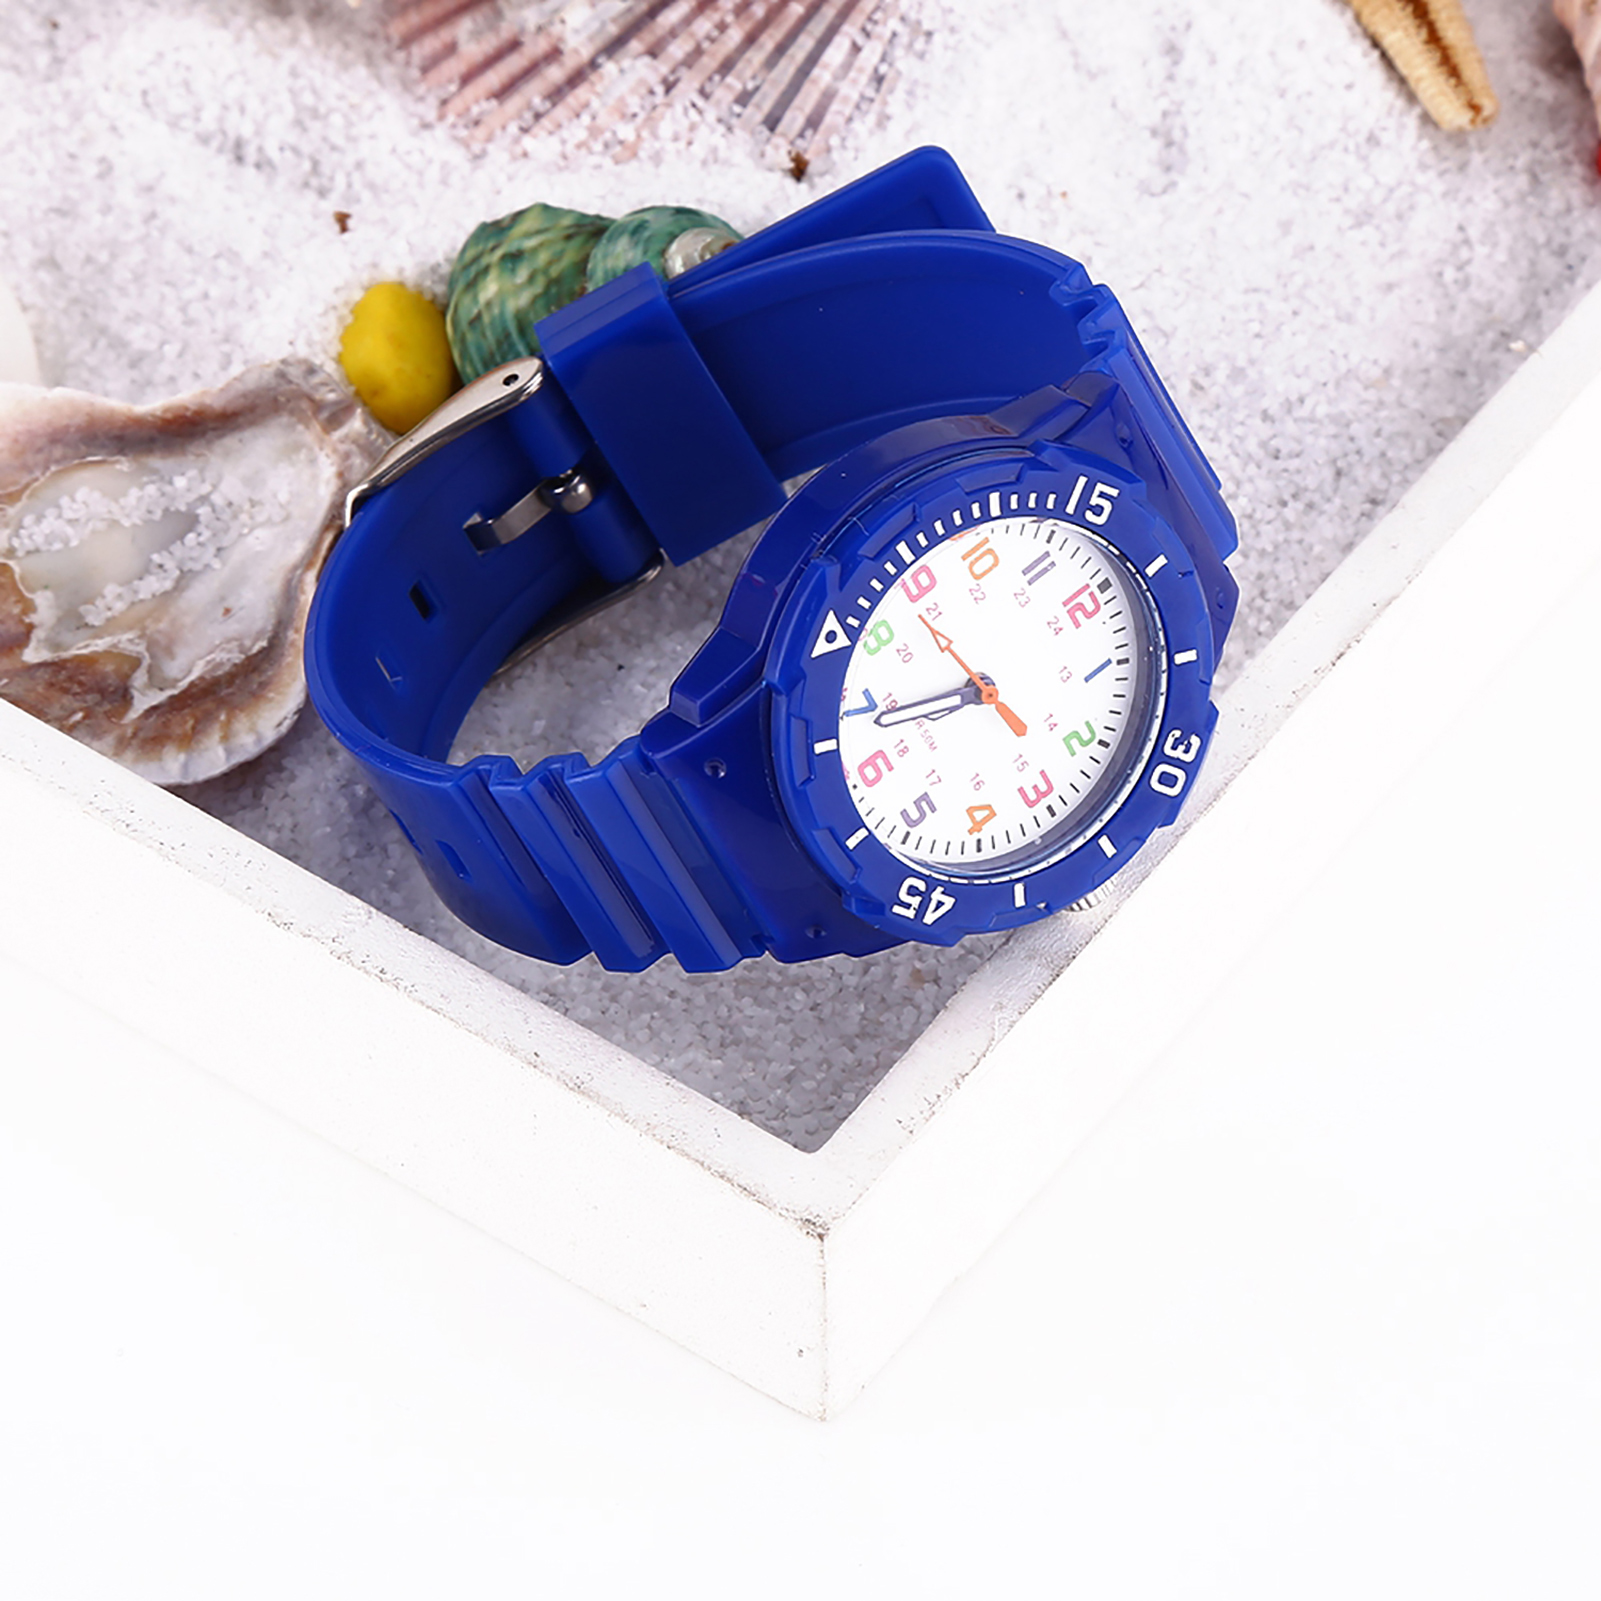 Blue Sports Quartz Children's Wristwatch